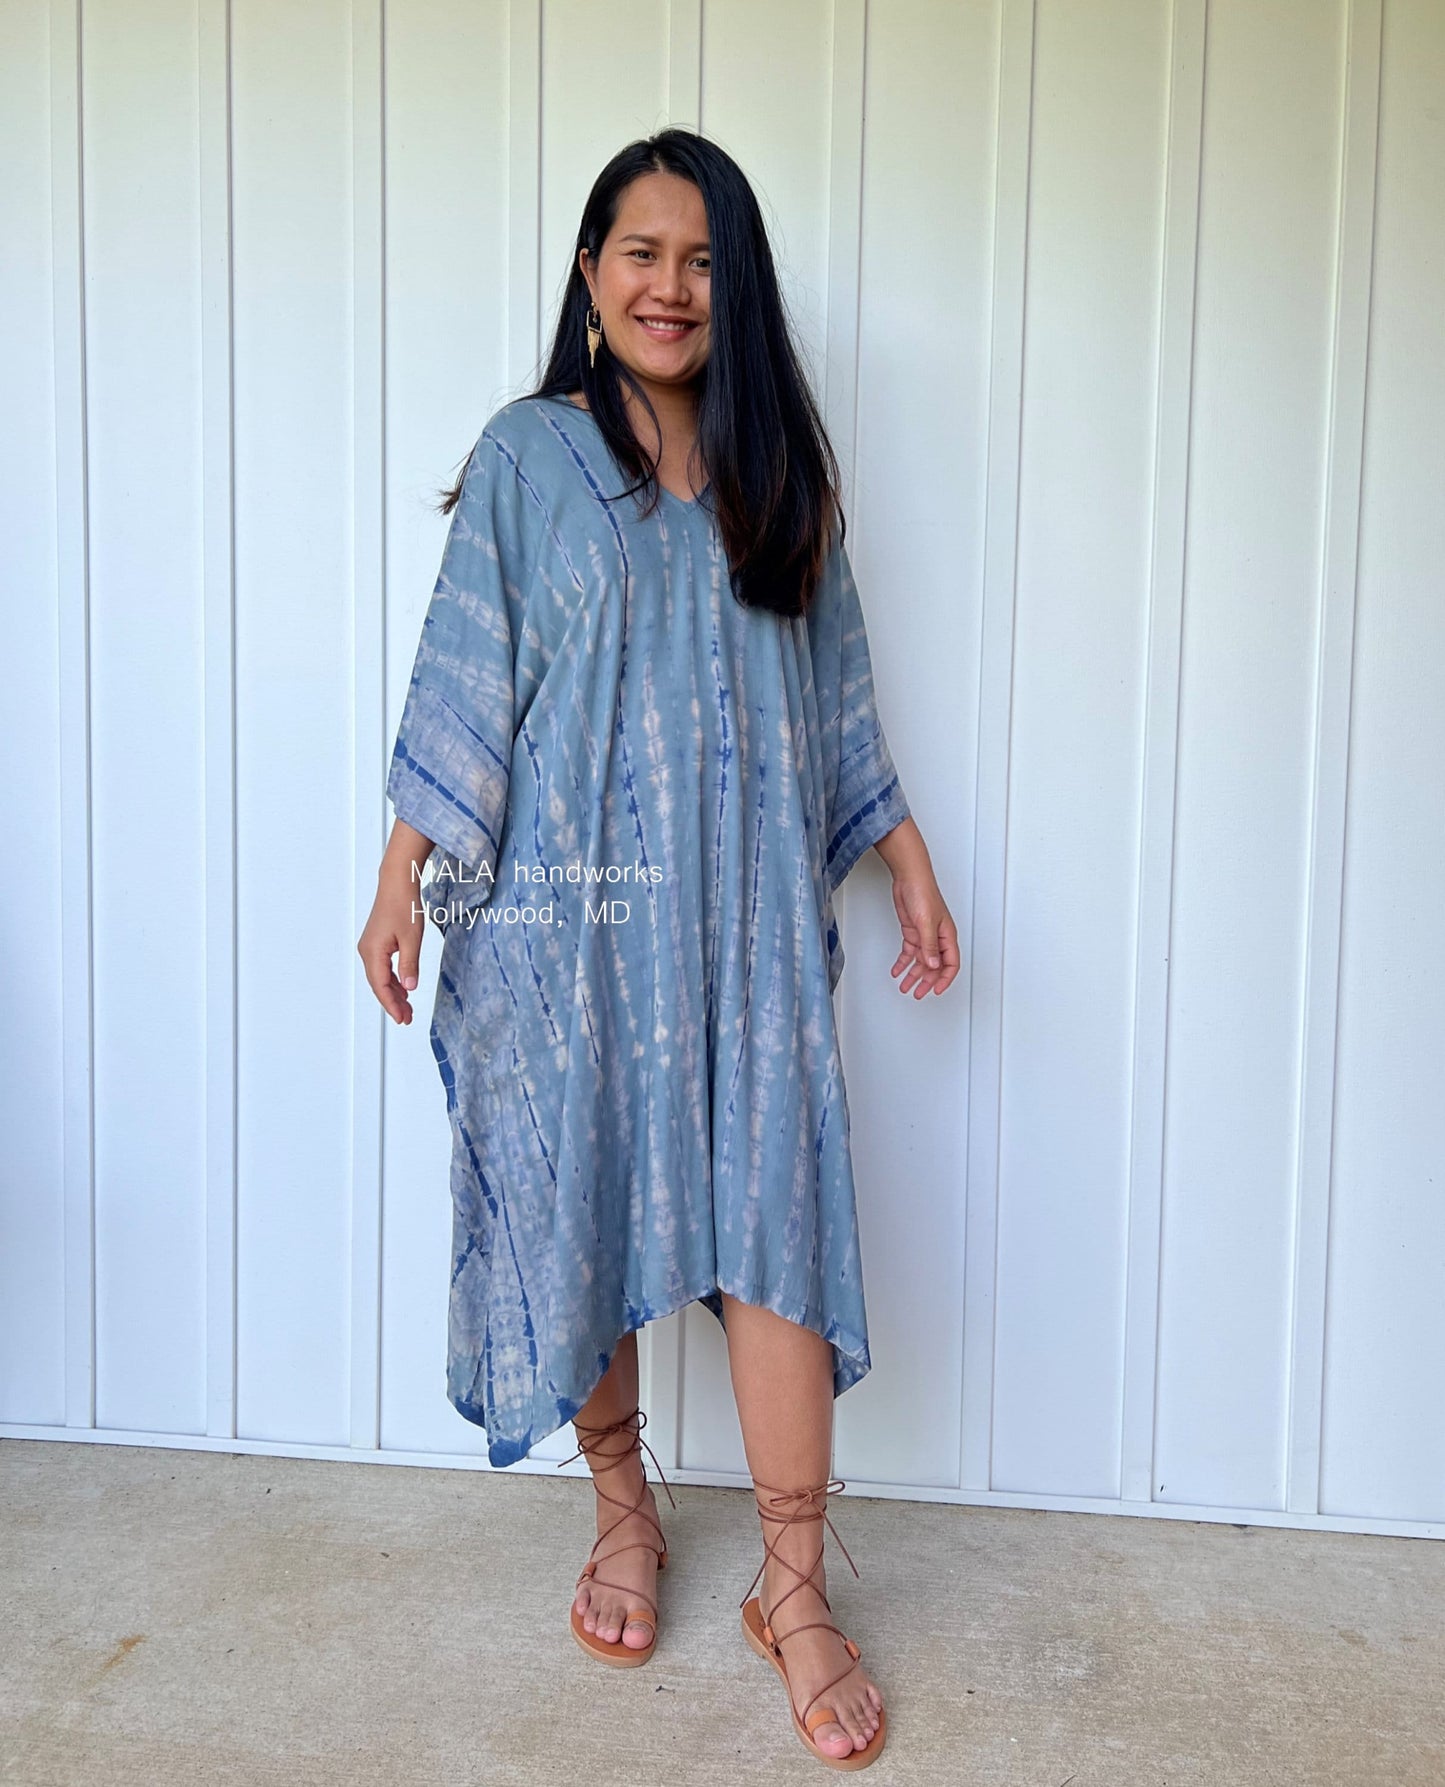 MALA handworks  Fiona Midi Kaftan in Gray and Blue Tie Dye